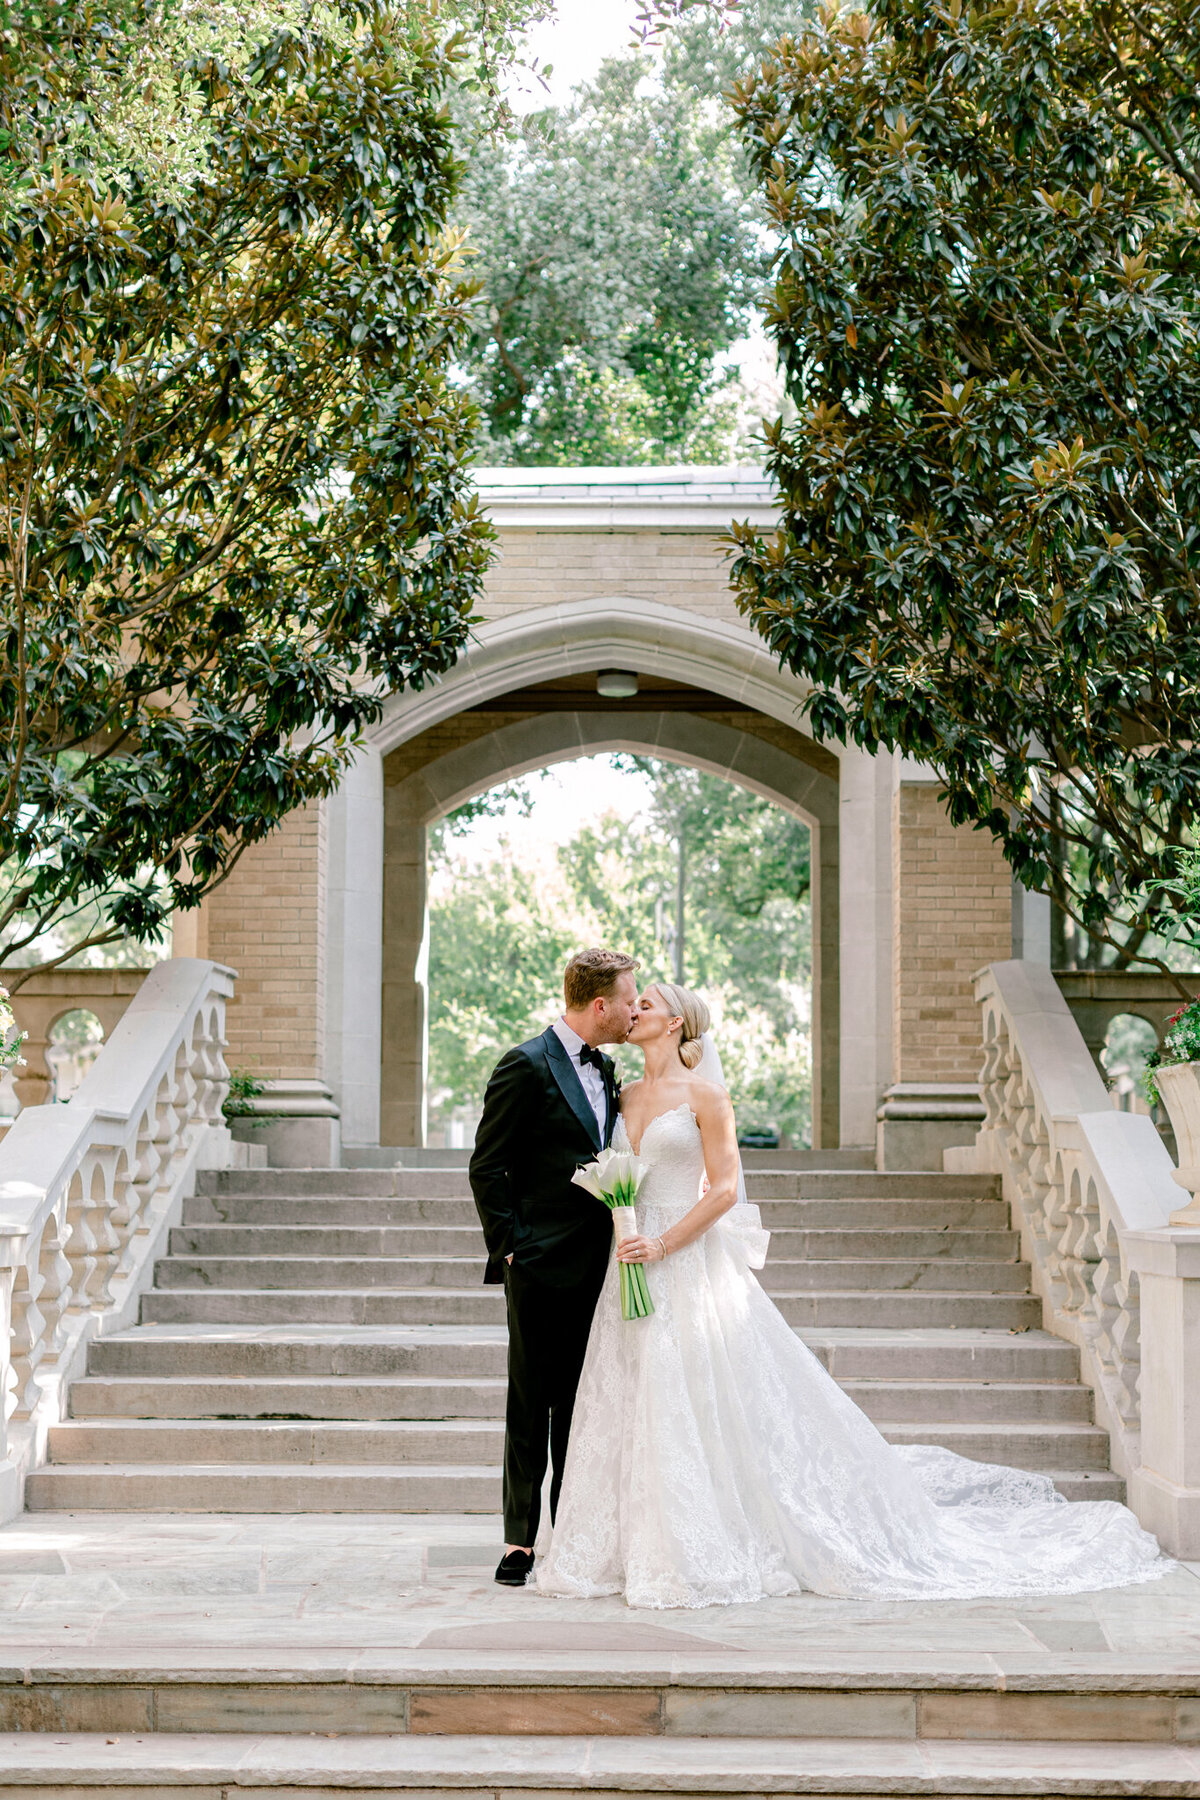 Katelyn & Kyle's Wedding at the Adolphus Hotel | Dallas Wedding Photographer | Sami Kathryn Photography-223